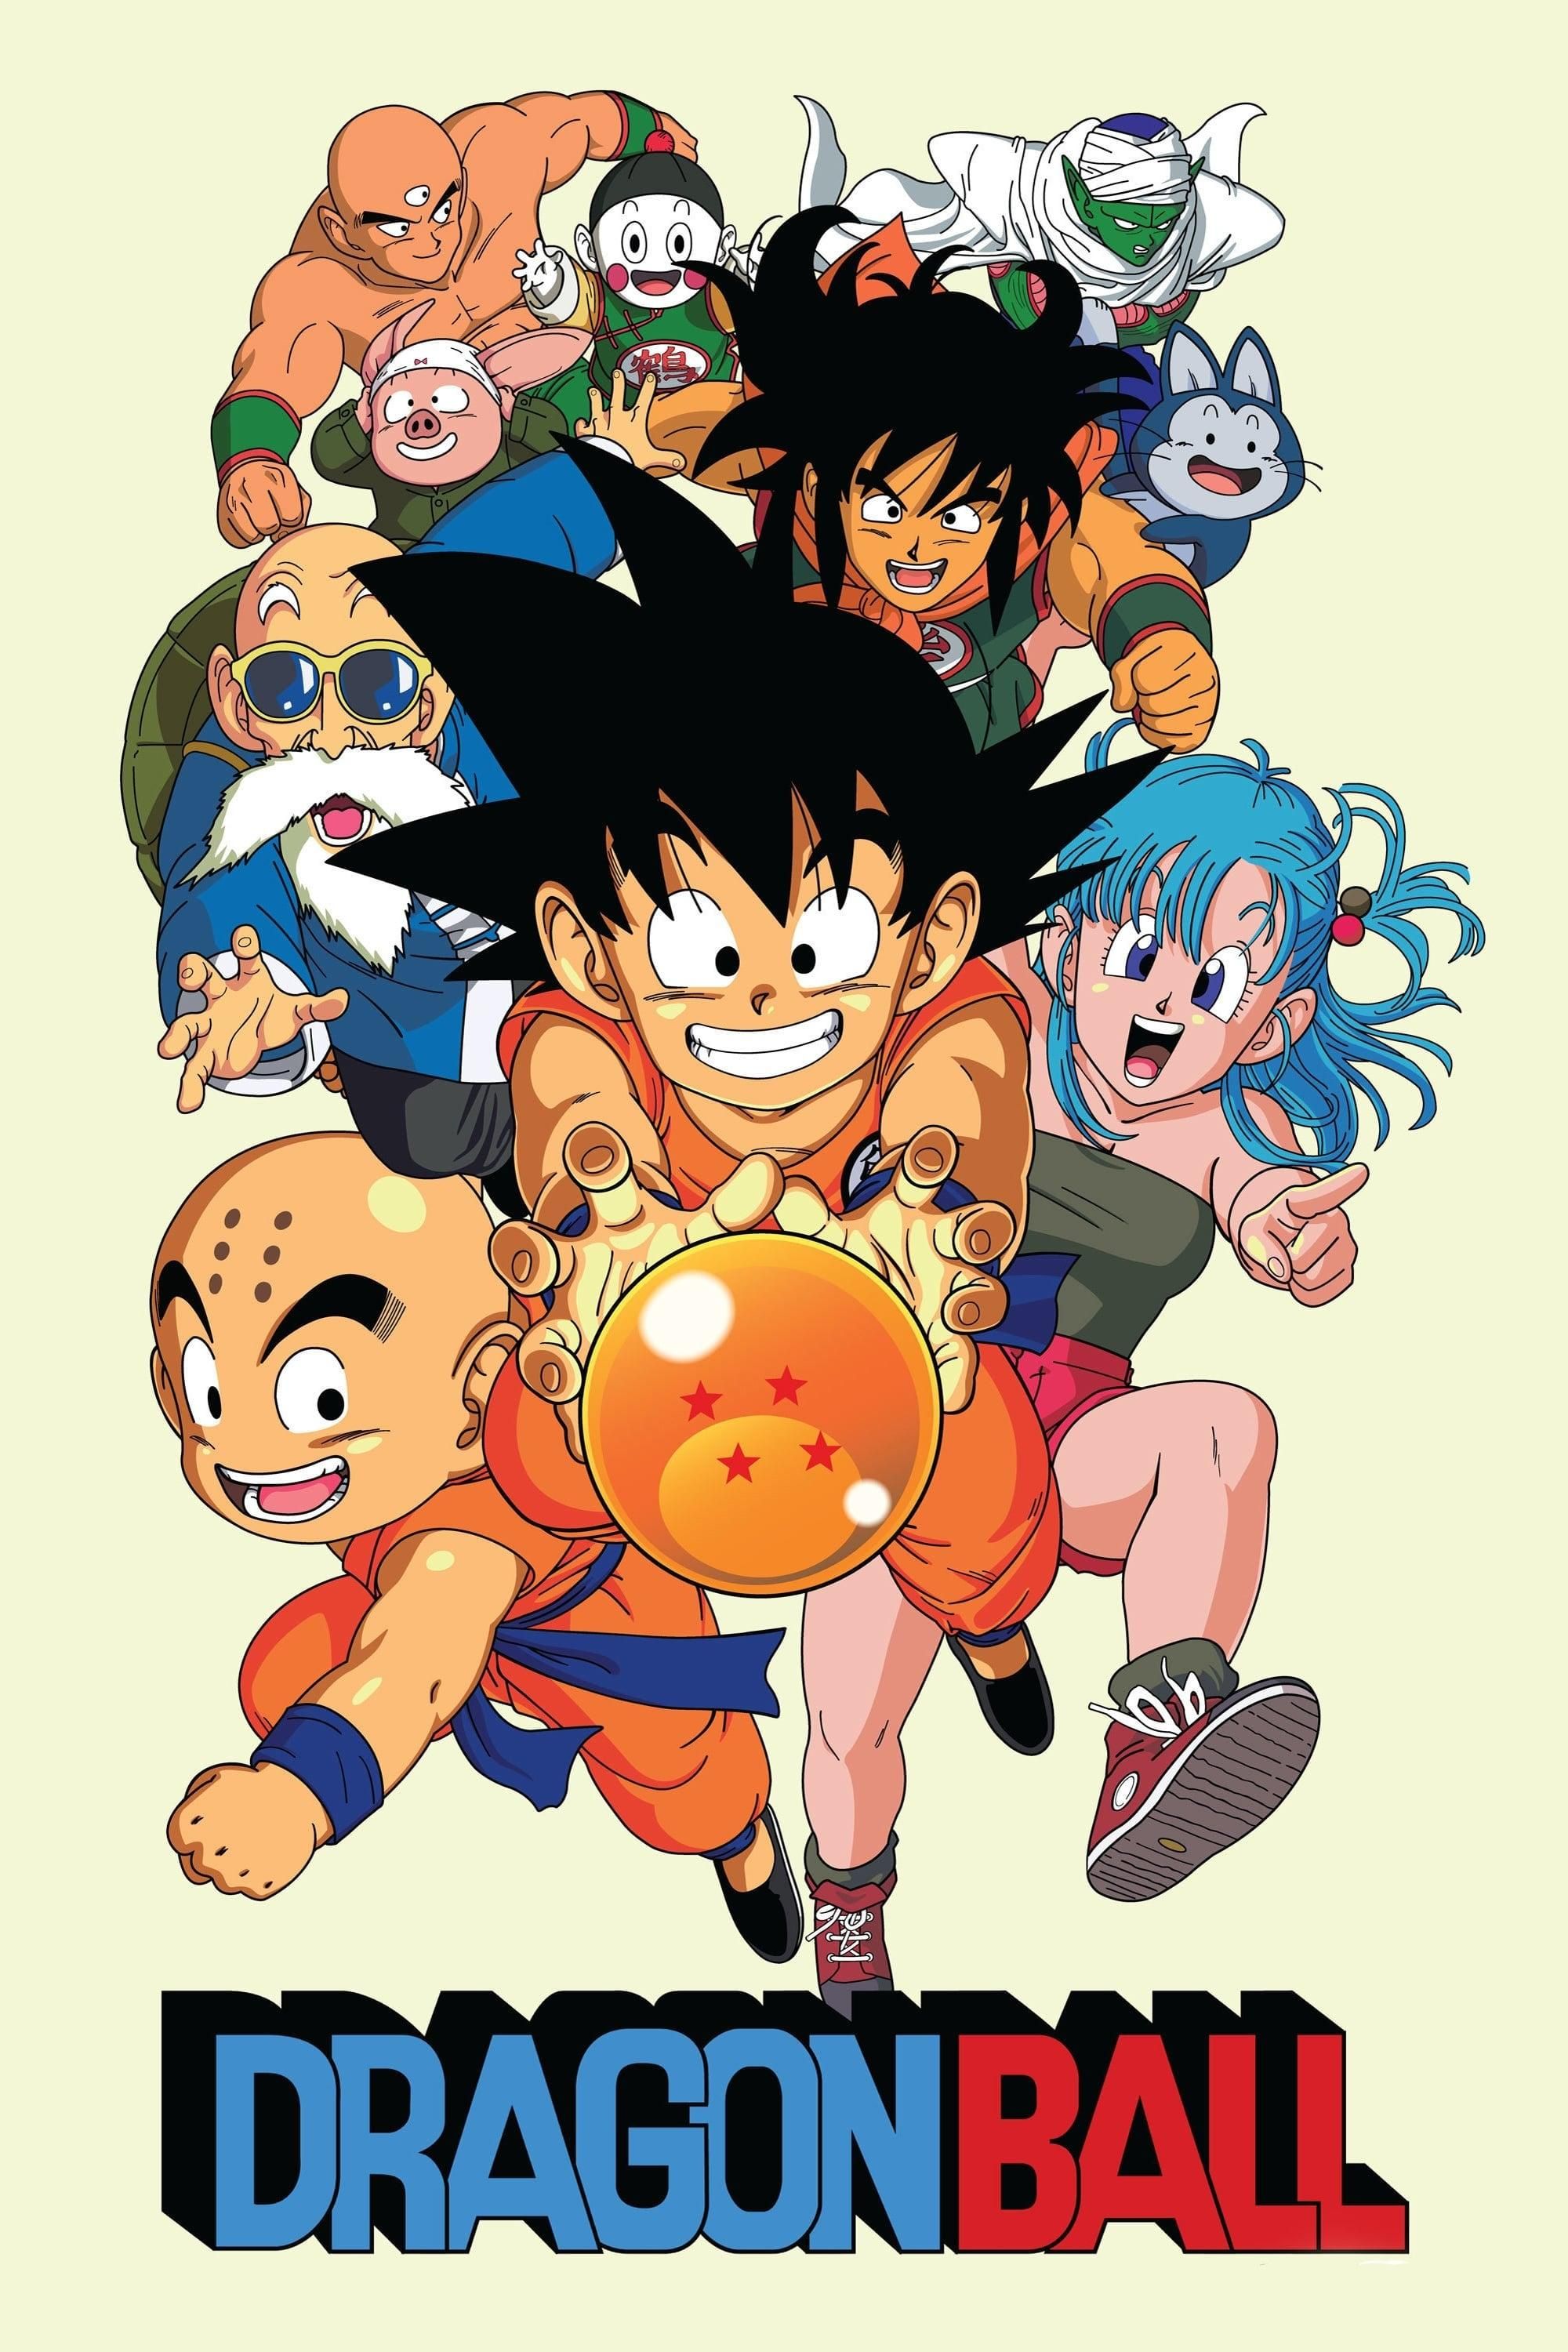 Poster for Dragon Ball series